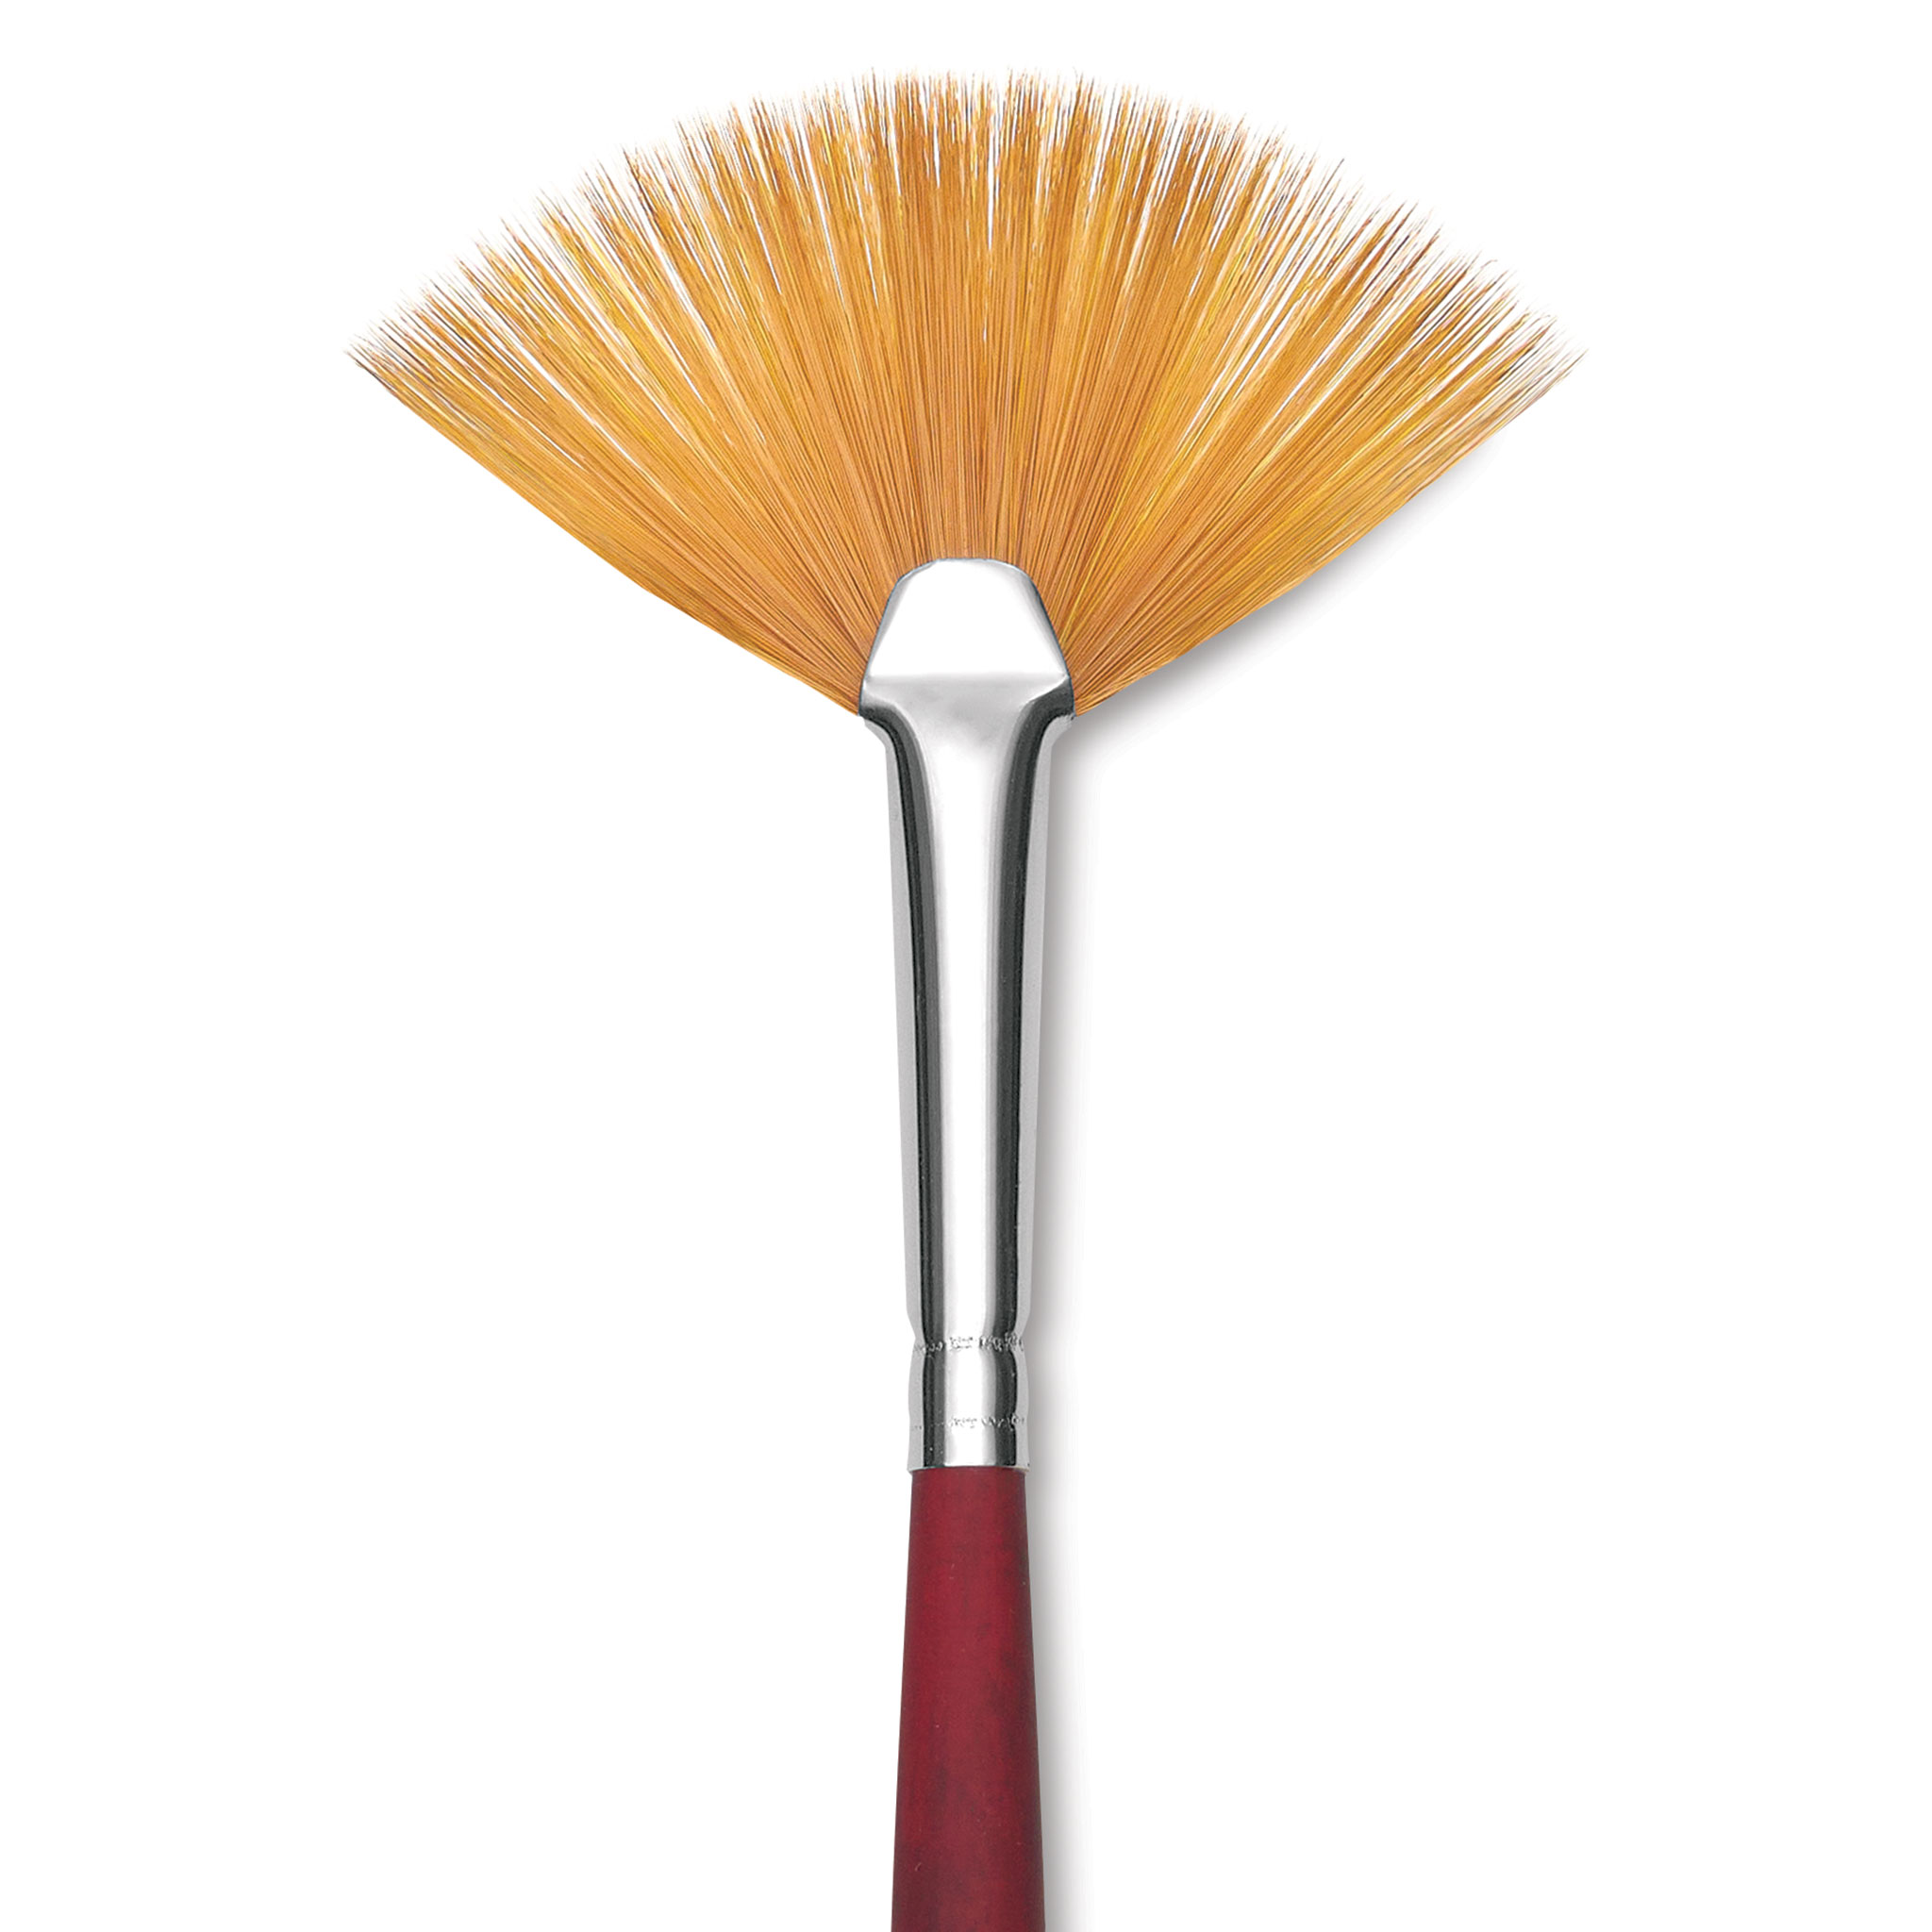 Princeton 3950 Velvetouch Synthetic Sable Brush // Round — Stickerrific